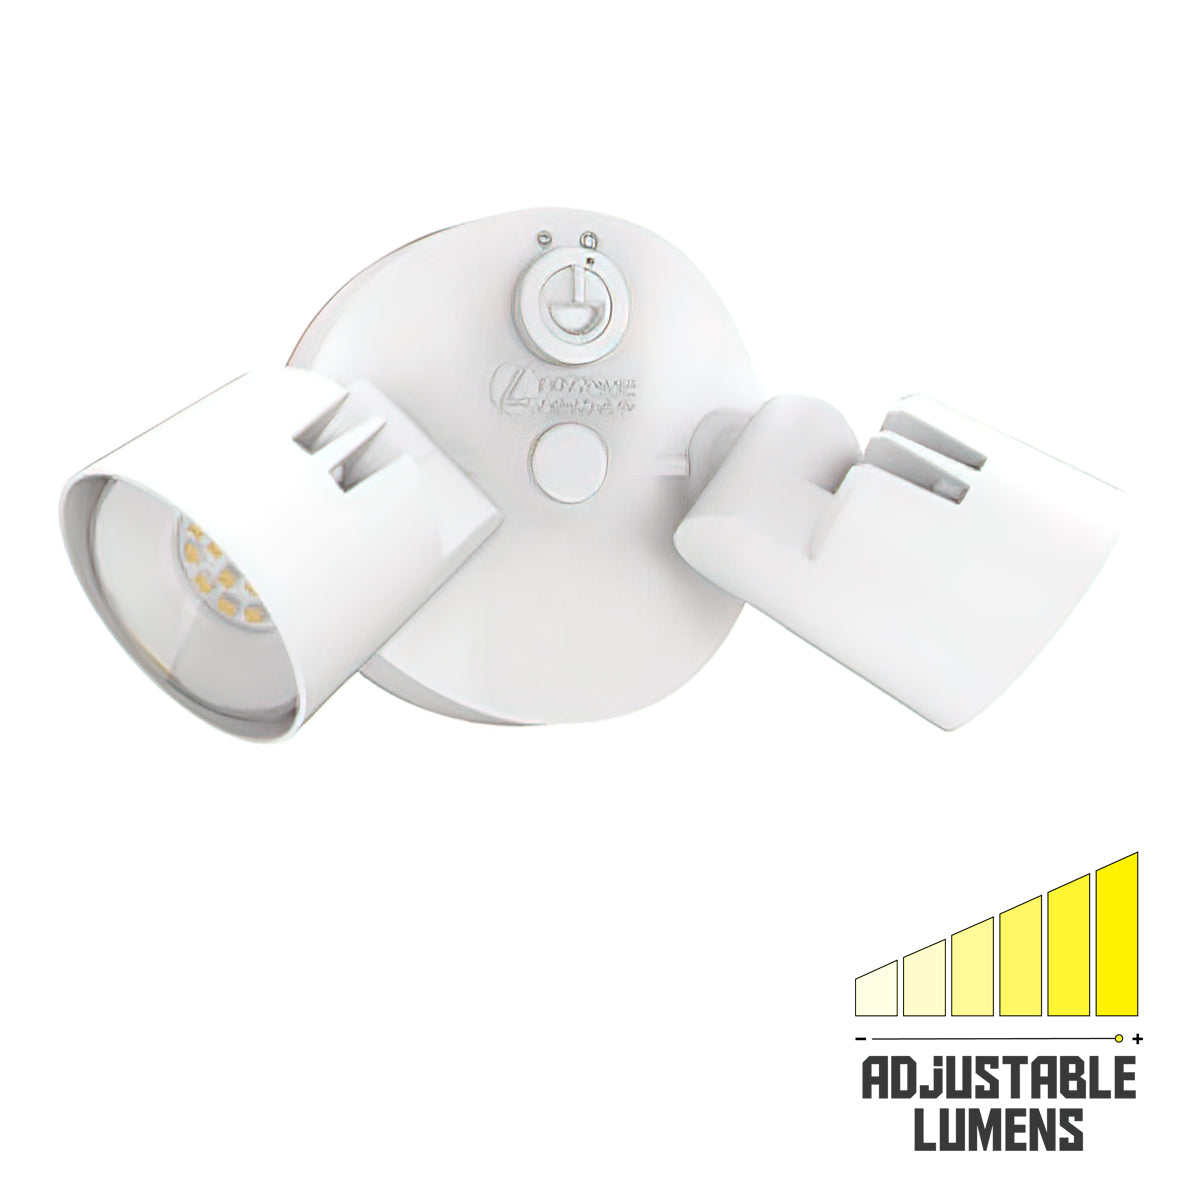 LED Security Flood Light With Photocell, 1700-2750 Lumens, 25 Watt, 4000K, Adjustable 2-Head, White Finish